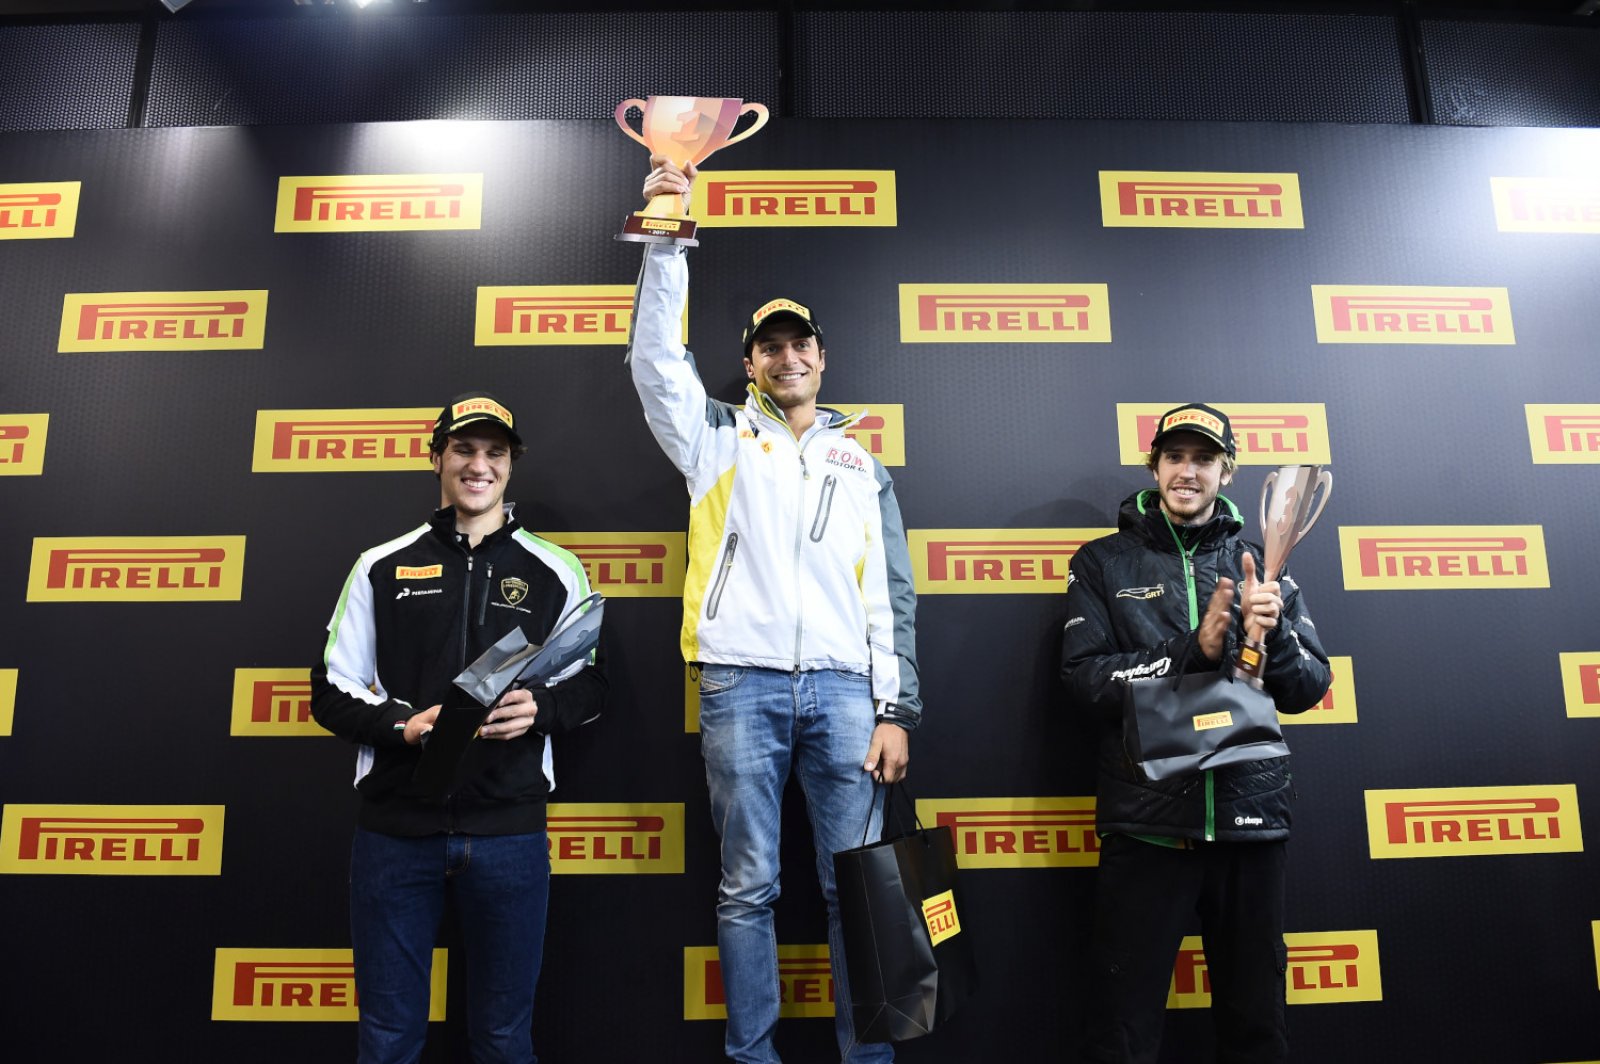 Bruno Spengler wins Pirelli Scalextric challenge